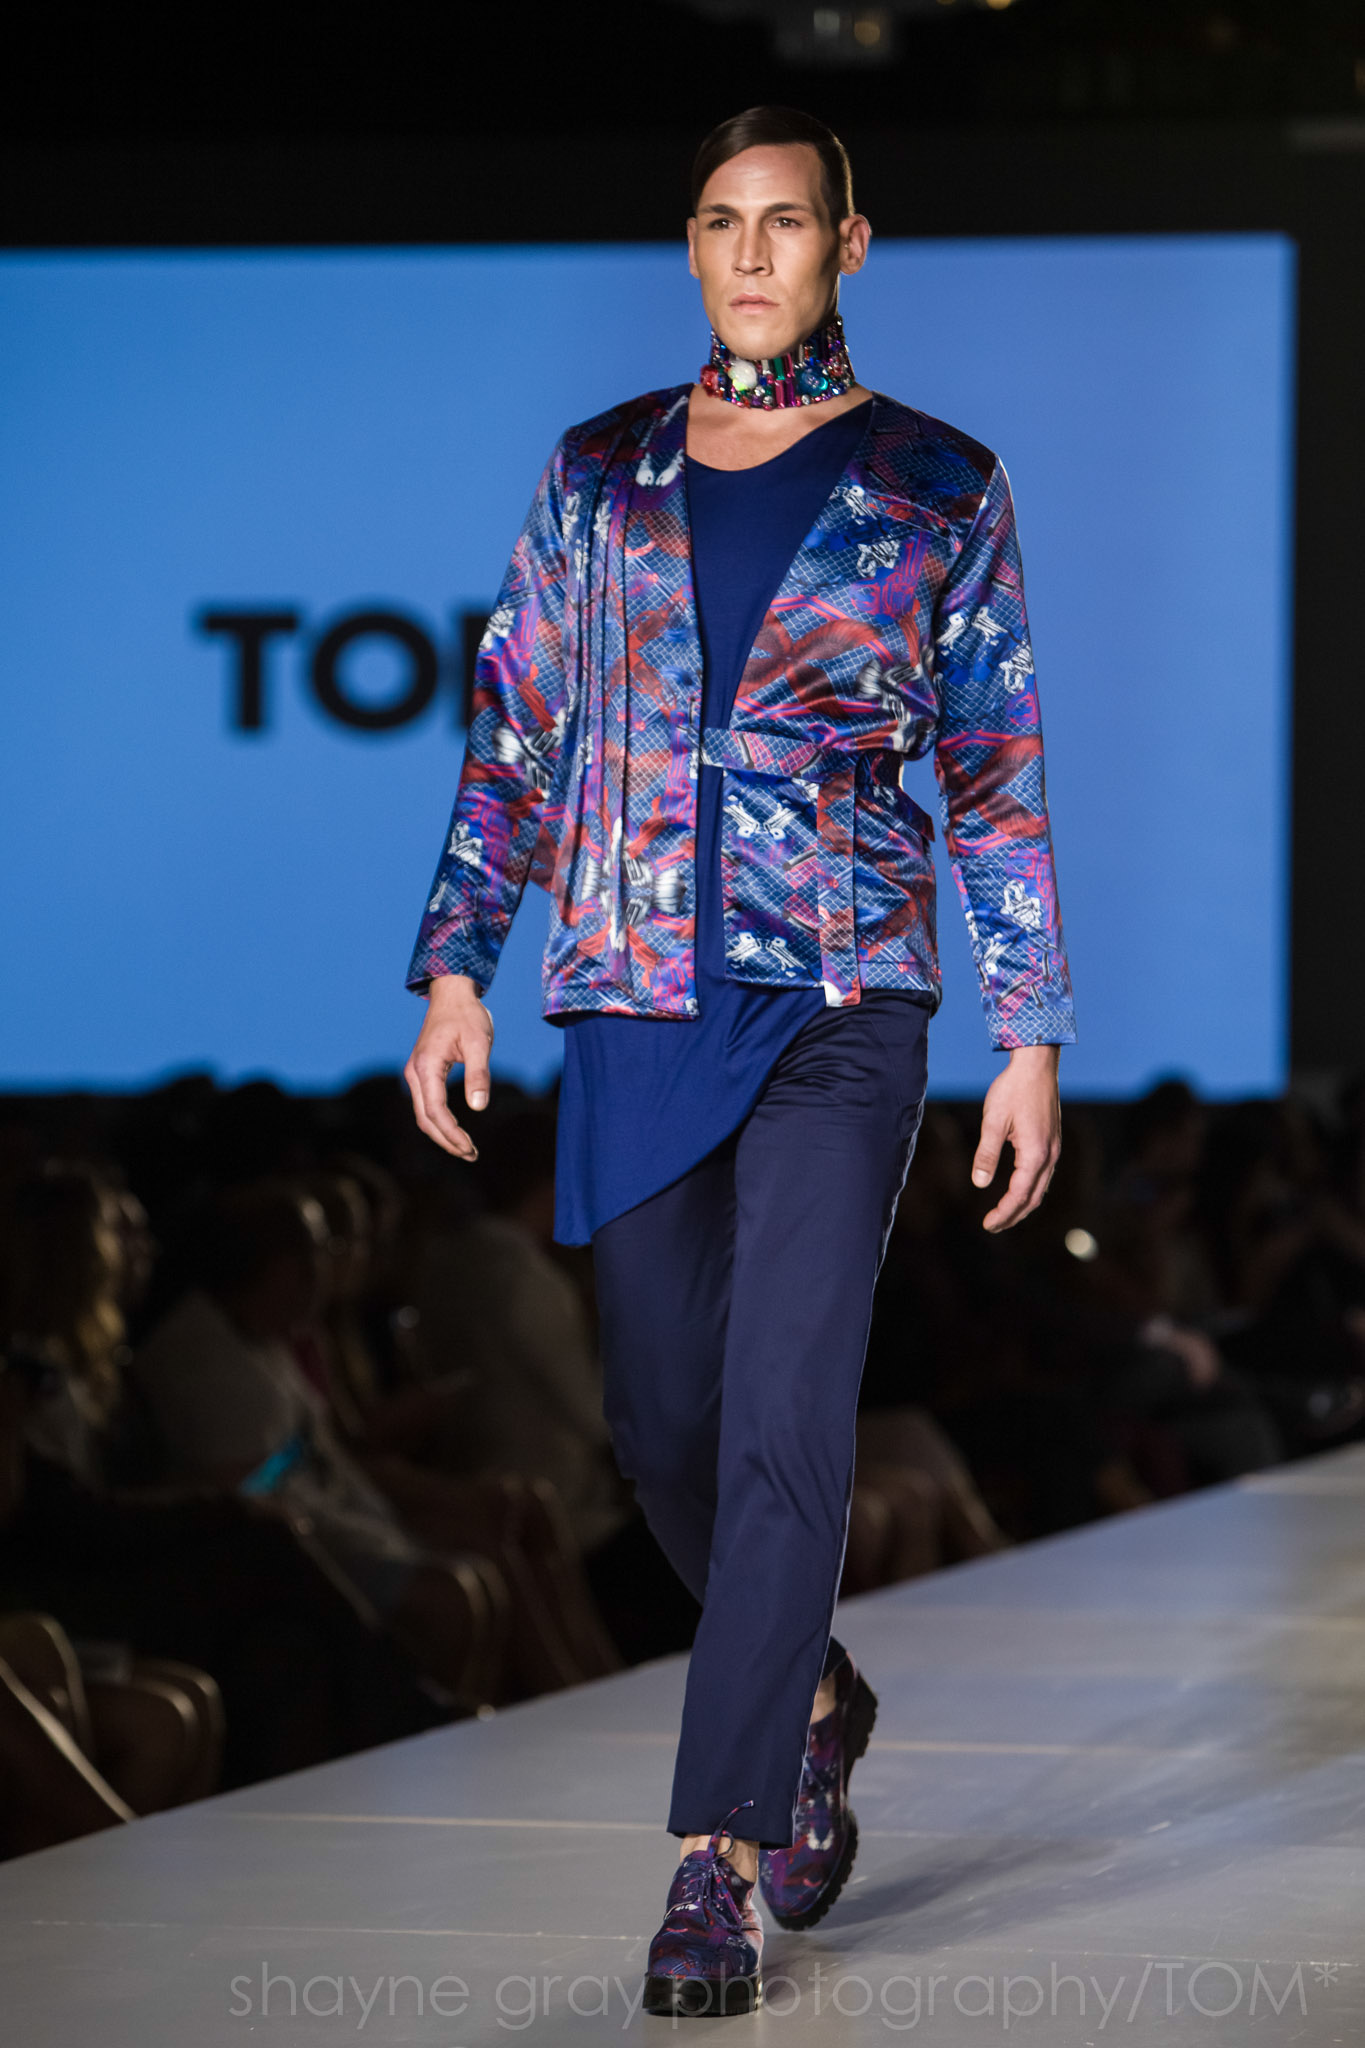 Shayne-Gray-Toronto-men's-fashion_week-TOM-paul-nathaphol-7956.jpg